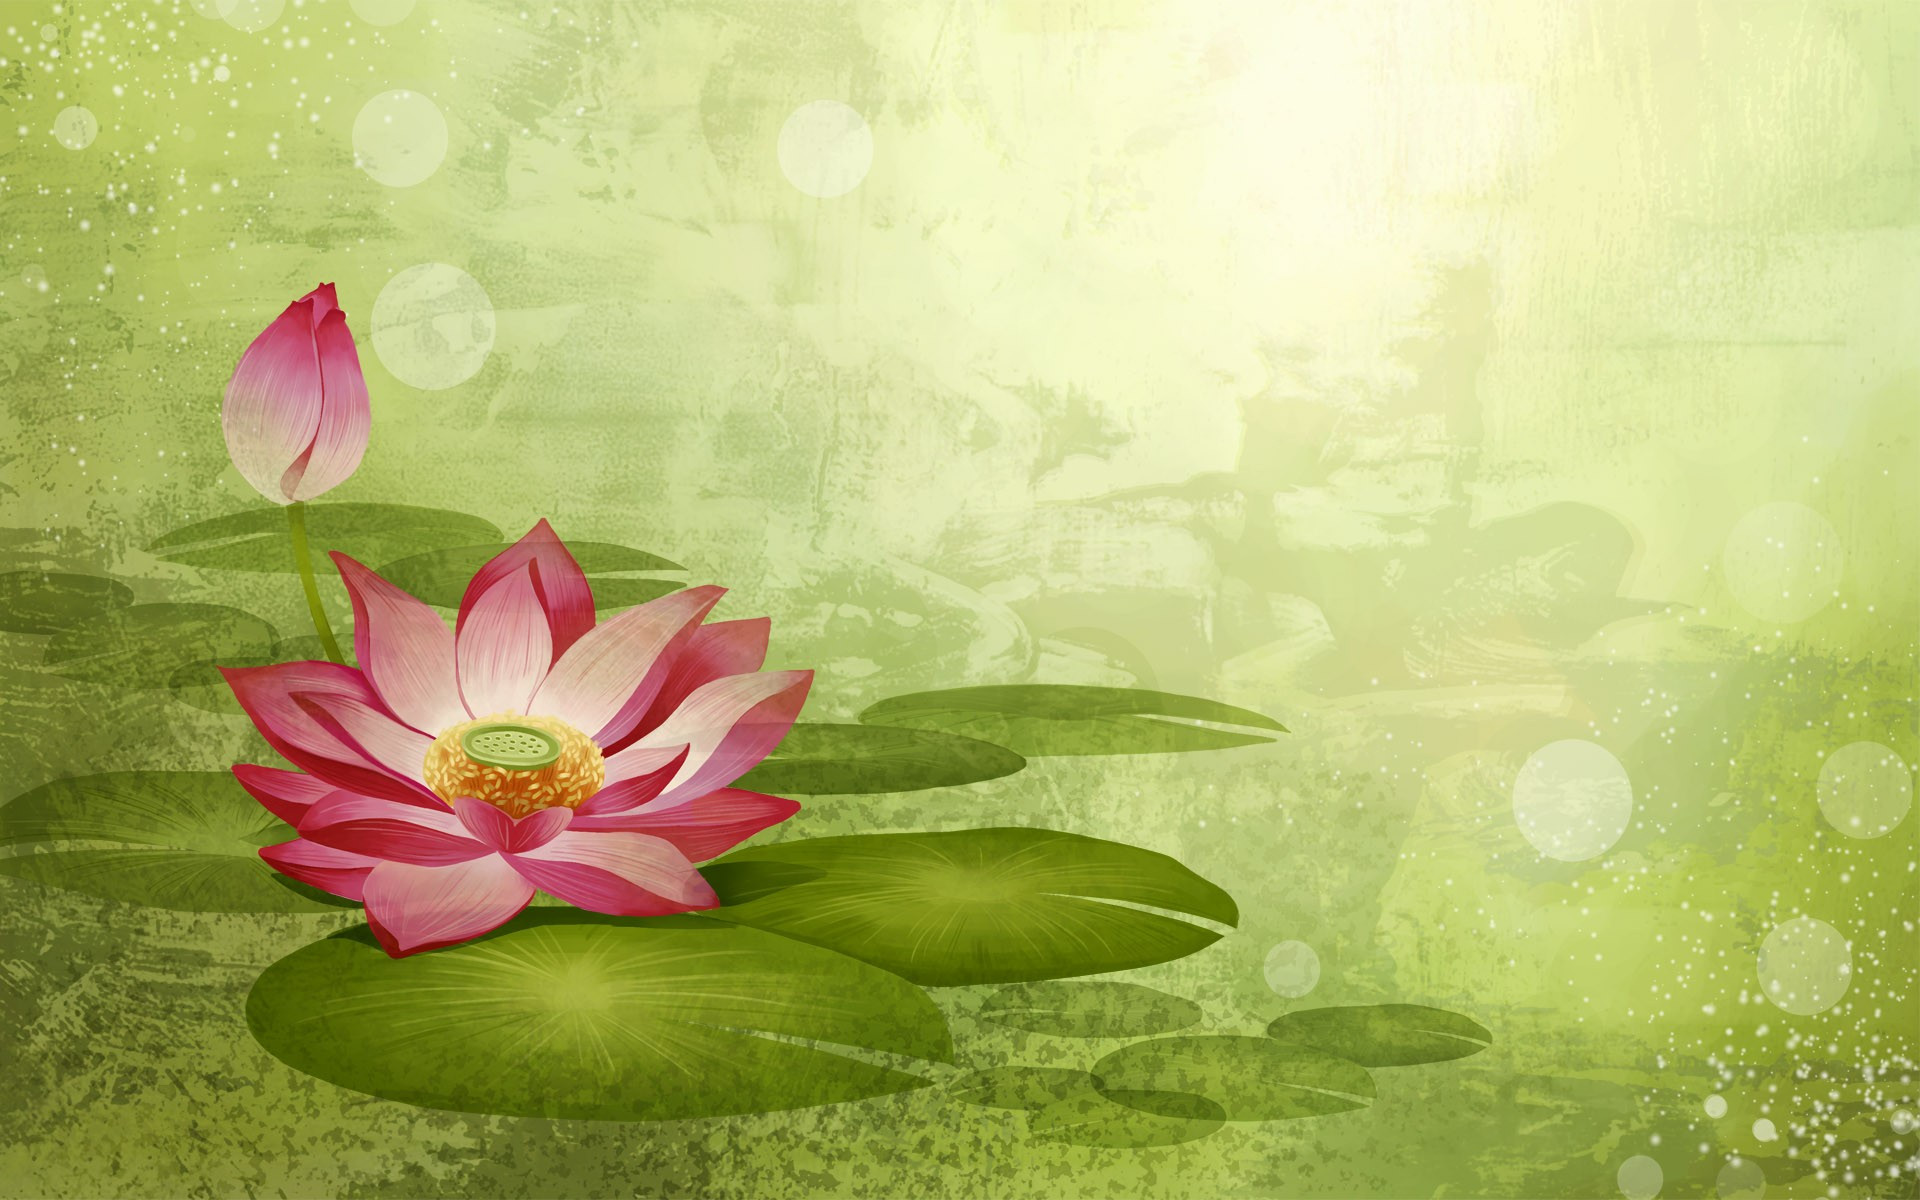 Lotus Flower Drawing Picture Wallpaper - Gallery Wallpaper ...